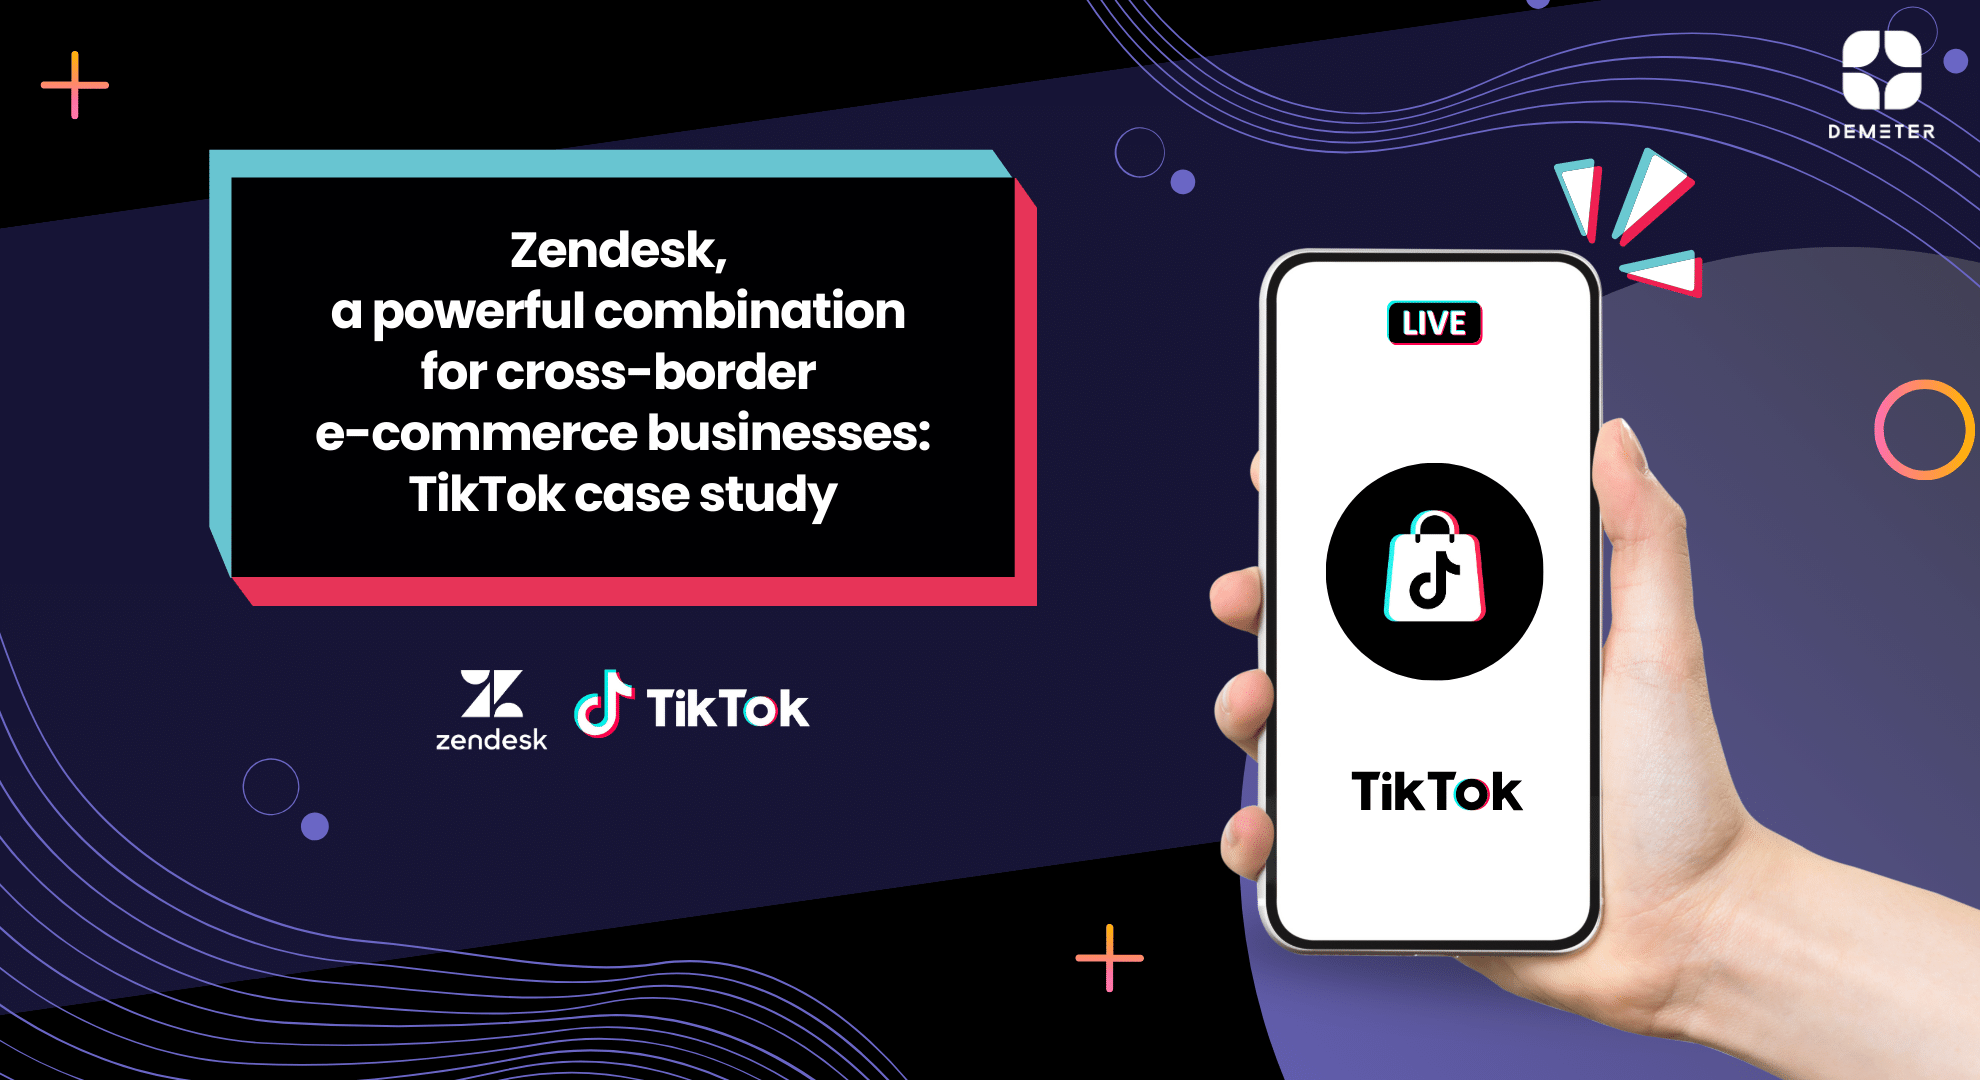 Zendesk, a powerful combination for cross-border e-commerce businesses TikTok case study